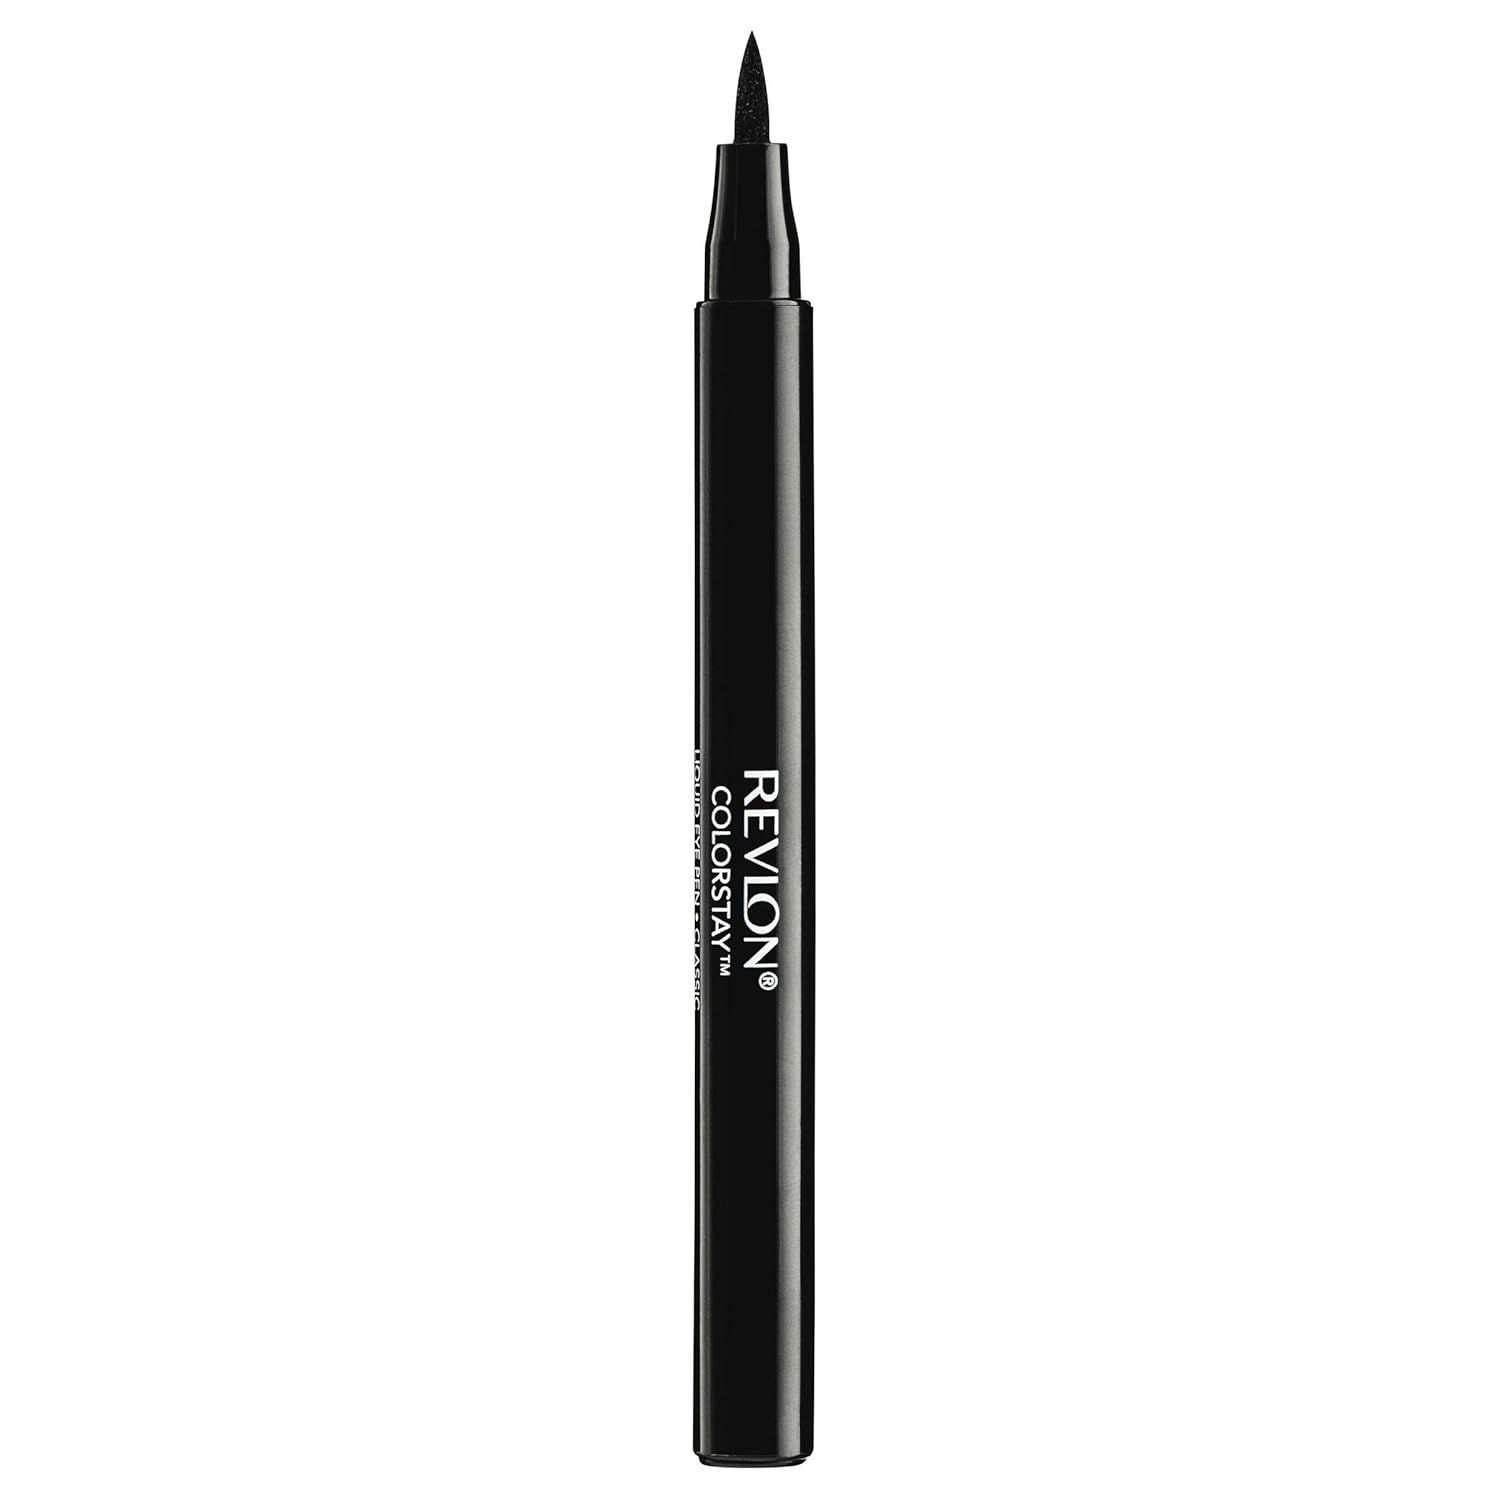 Revlon Colorstay Liquid Eye Pen - 01 Blackest Black